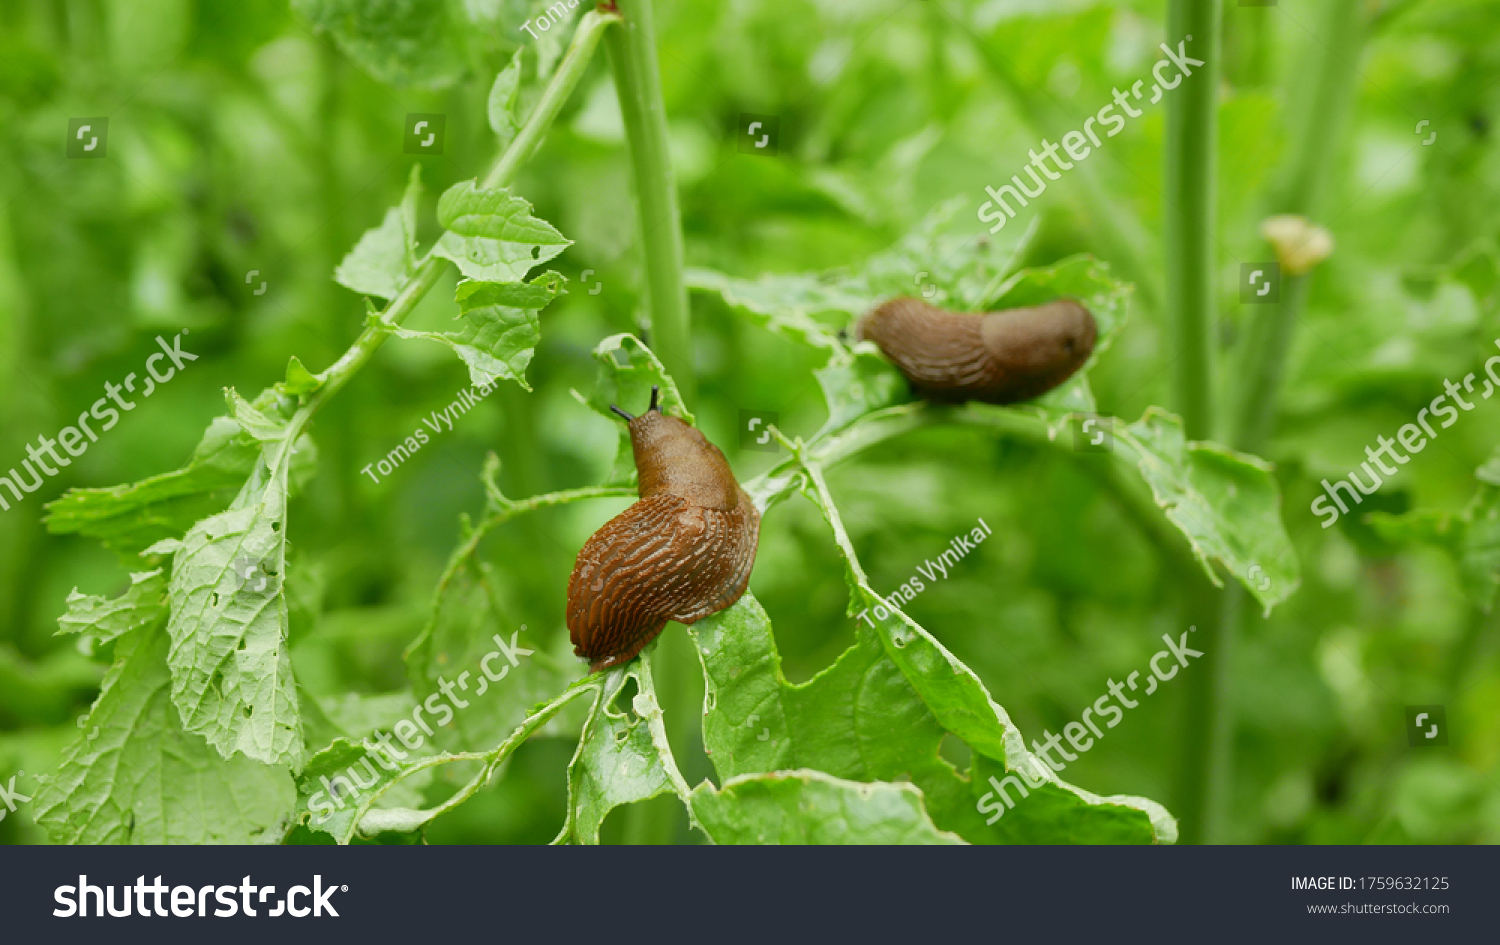 Spanish slug Arion vulgaris snail parasitizes on radish or lettuce cabbage moves garden field, eating ripe plant crops, moving invasive brownish dangerous pest agriculture, farming farm, poison #1759632125